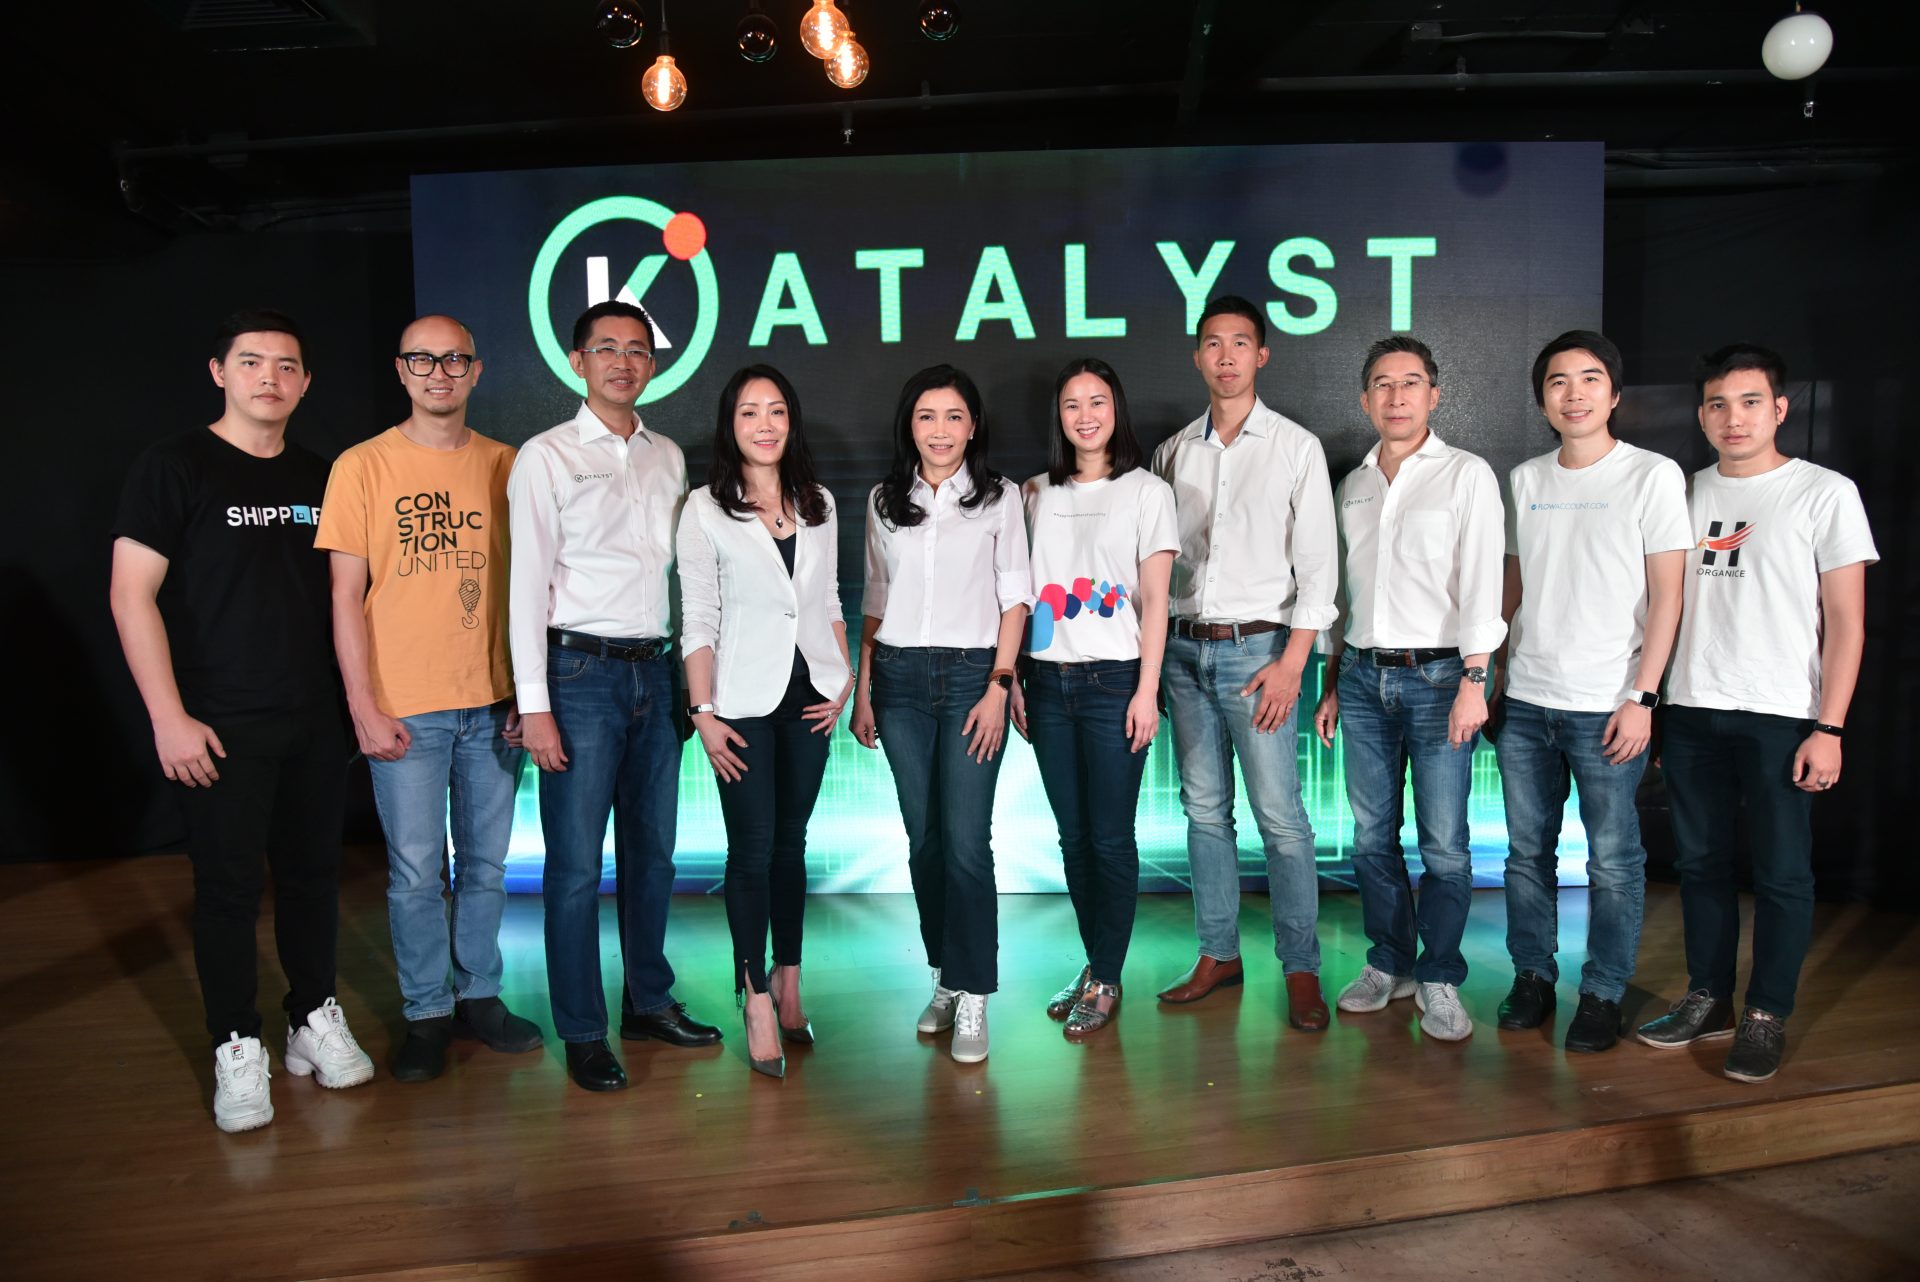 KATALYST โครงการเพื่อนคู่คิดสตาร์ทอัปของกสิกรไทย ให้ความรู้ แชร์รูปแบบธุรกิจ เงินทุน และอีกหลากหลายรากฐานที่มั่นคง!